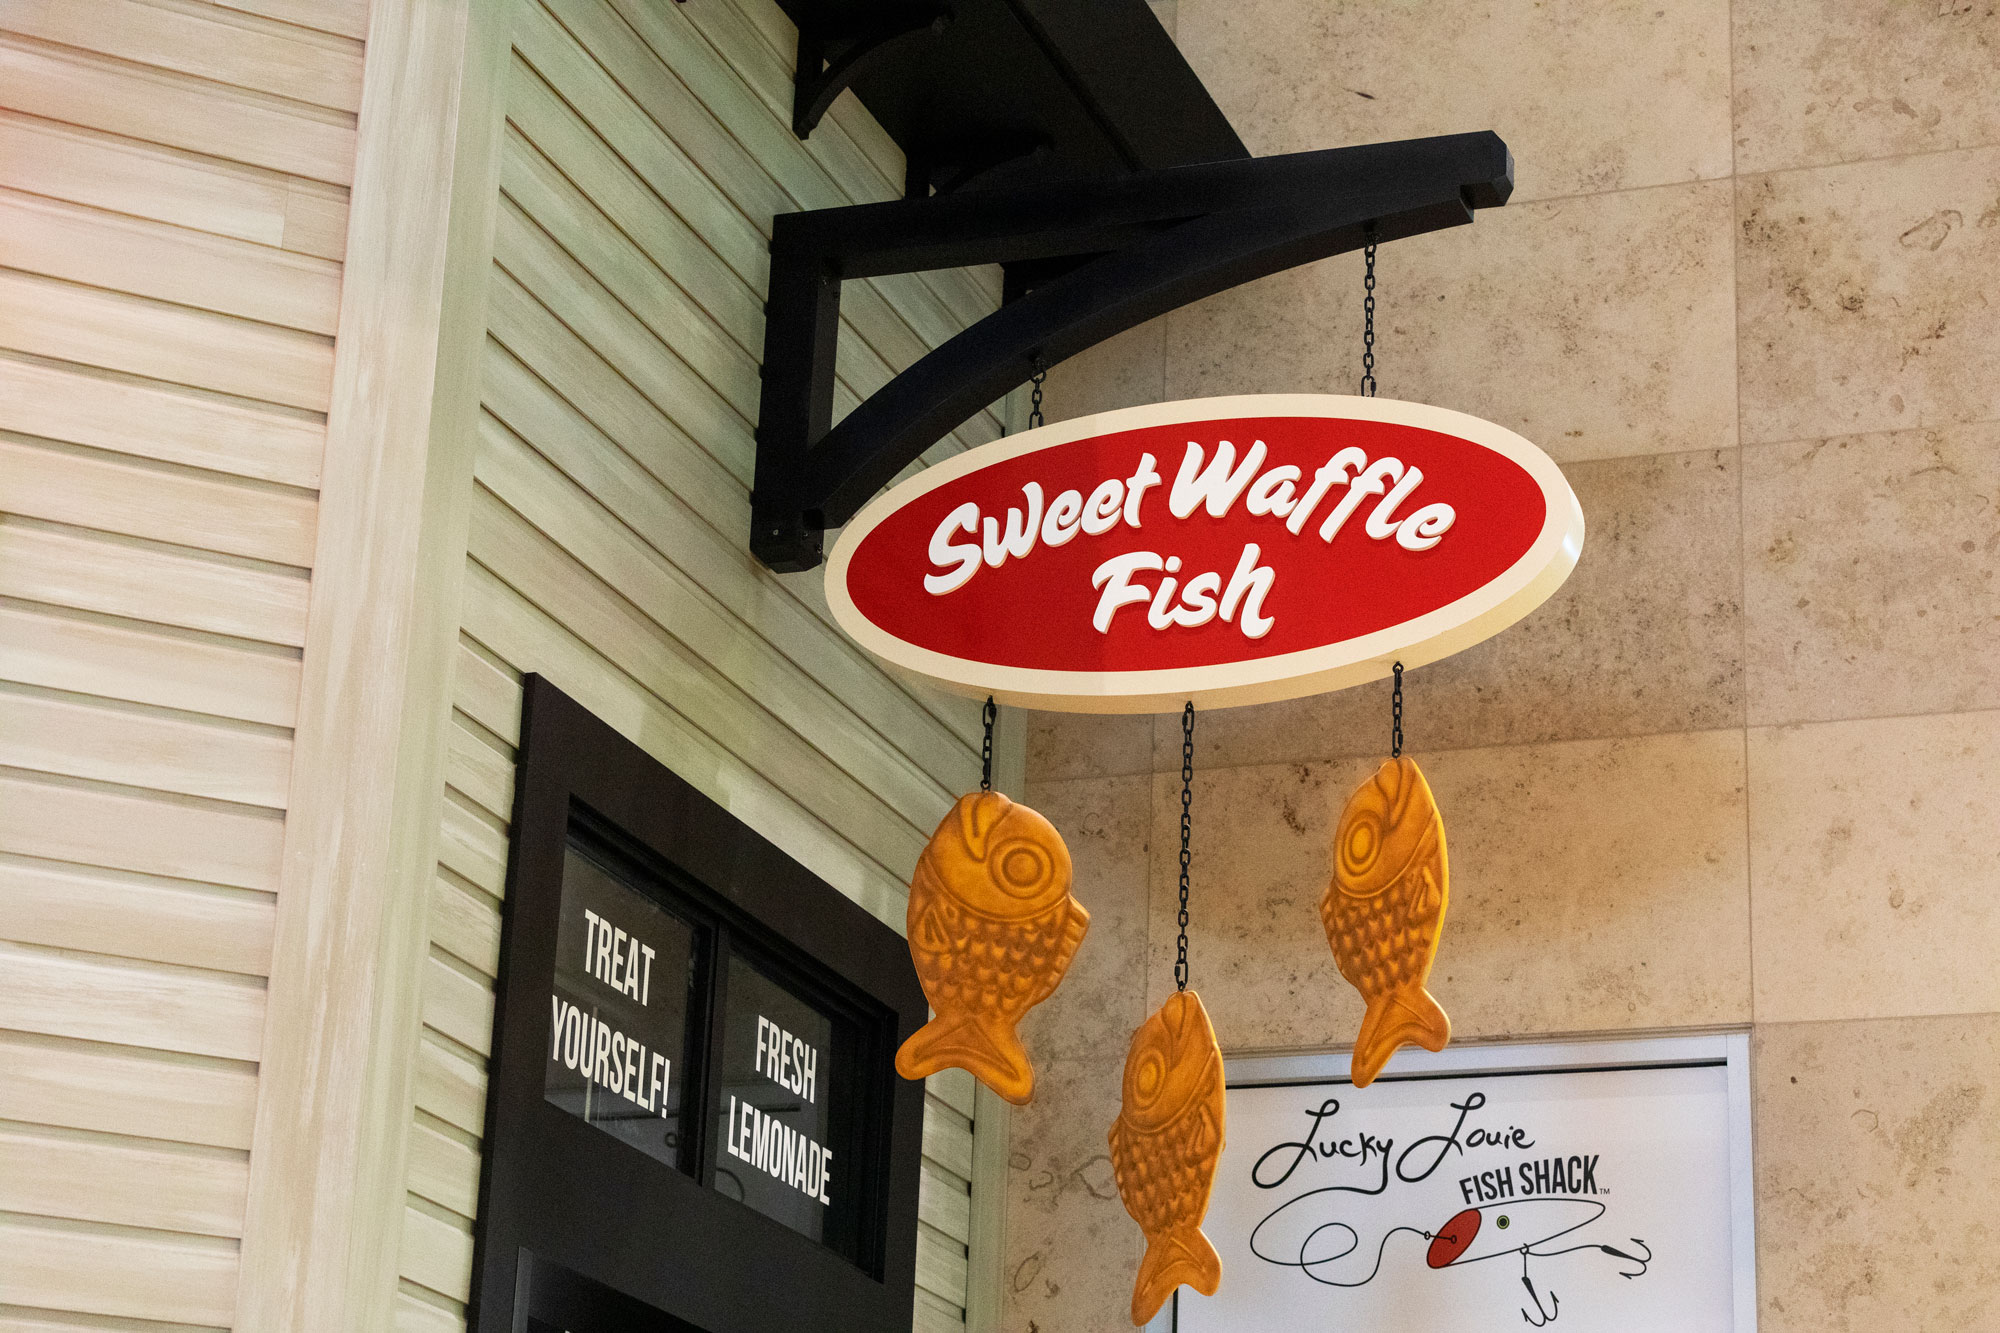 SEA Lucky Louie Fish Shack Sweet Waffle Fish Sign